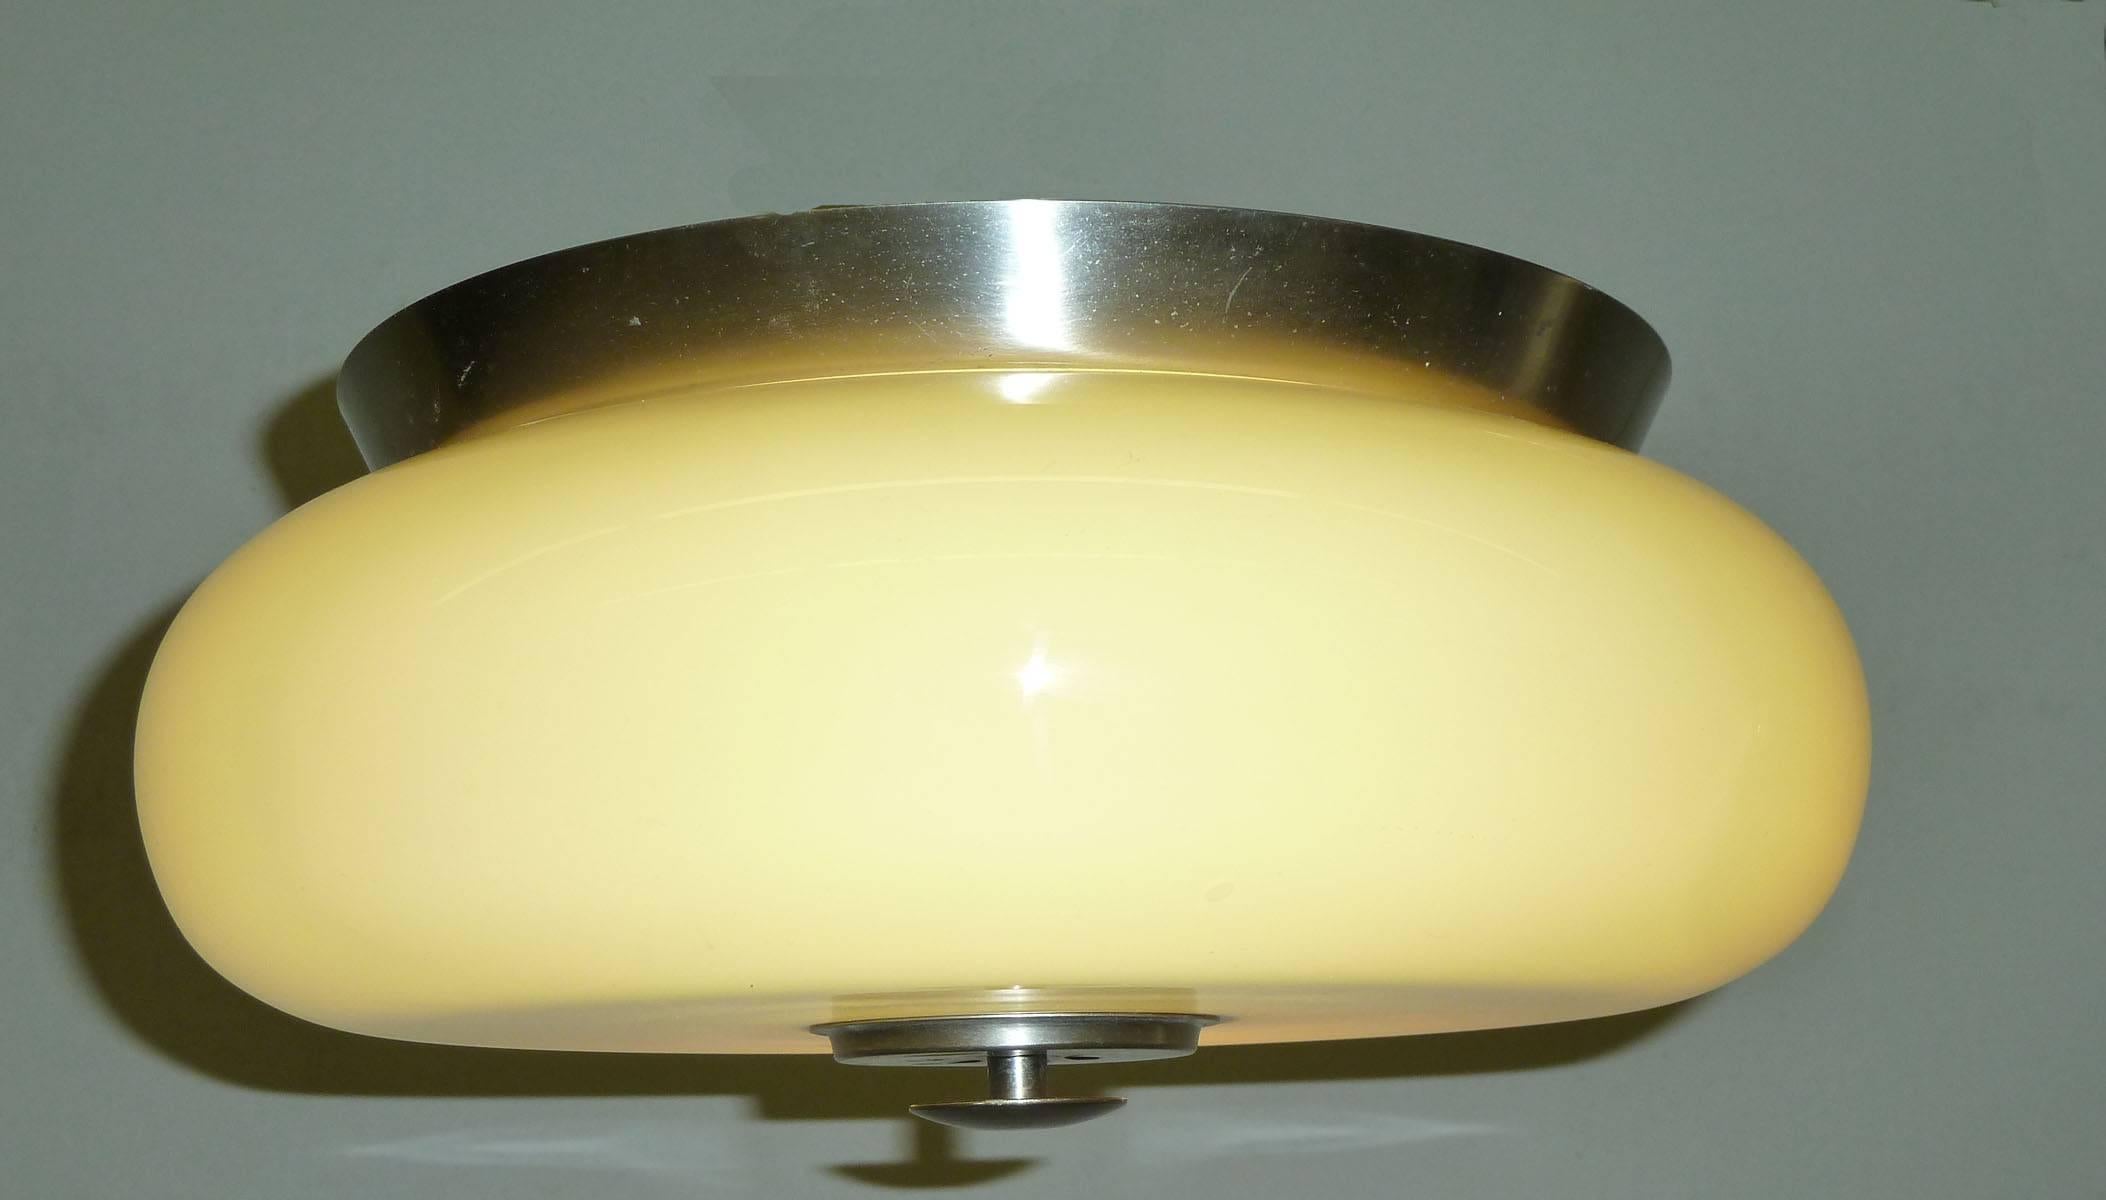 Yellow Murano glass flush mount light fixture.
It gives a beautiful warm light.